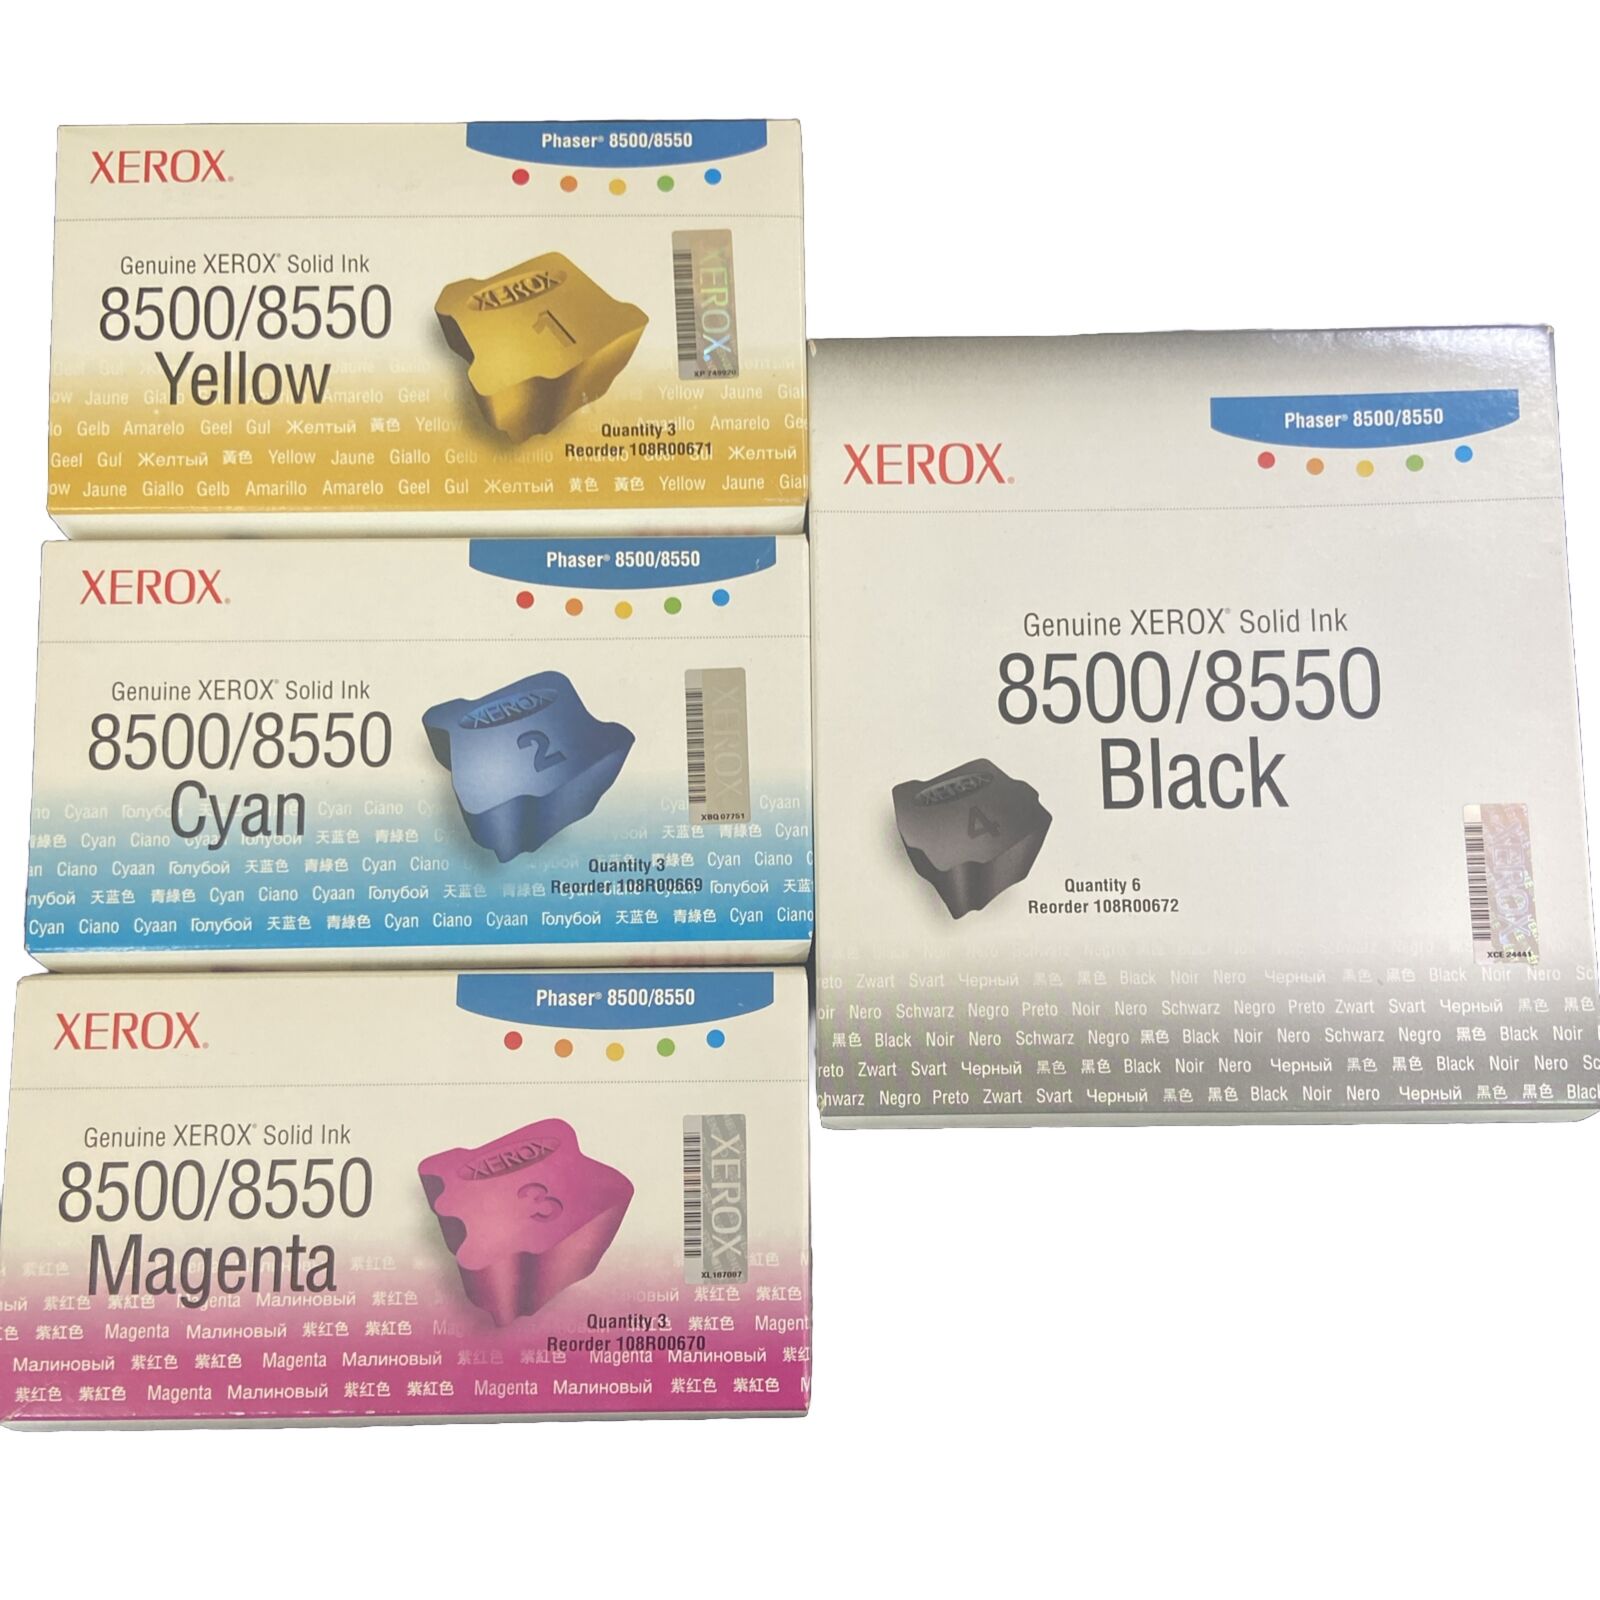 NIB Genuine Xerox Solid Ink 8500/8550, Full Set- Yellow, Cyan, Magenta, & Black